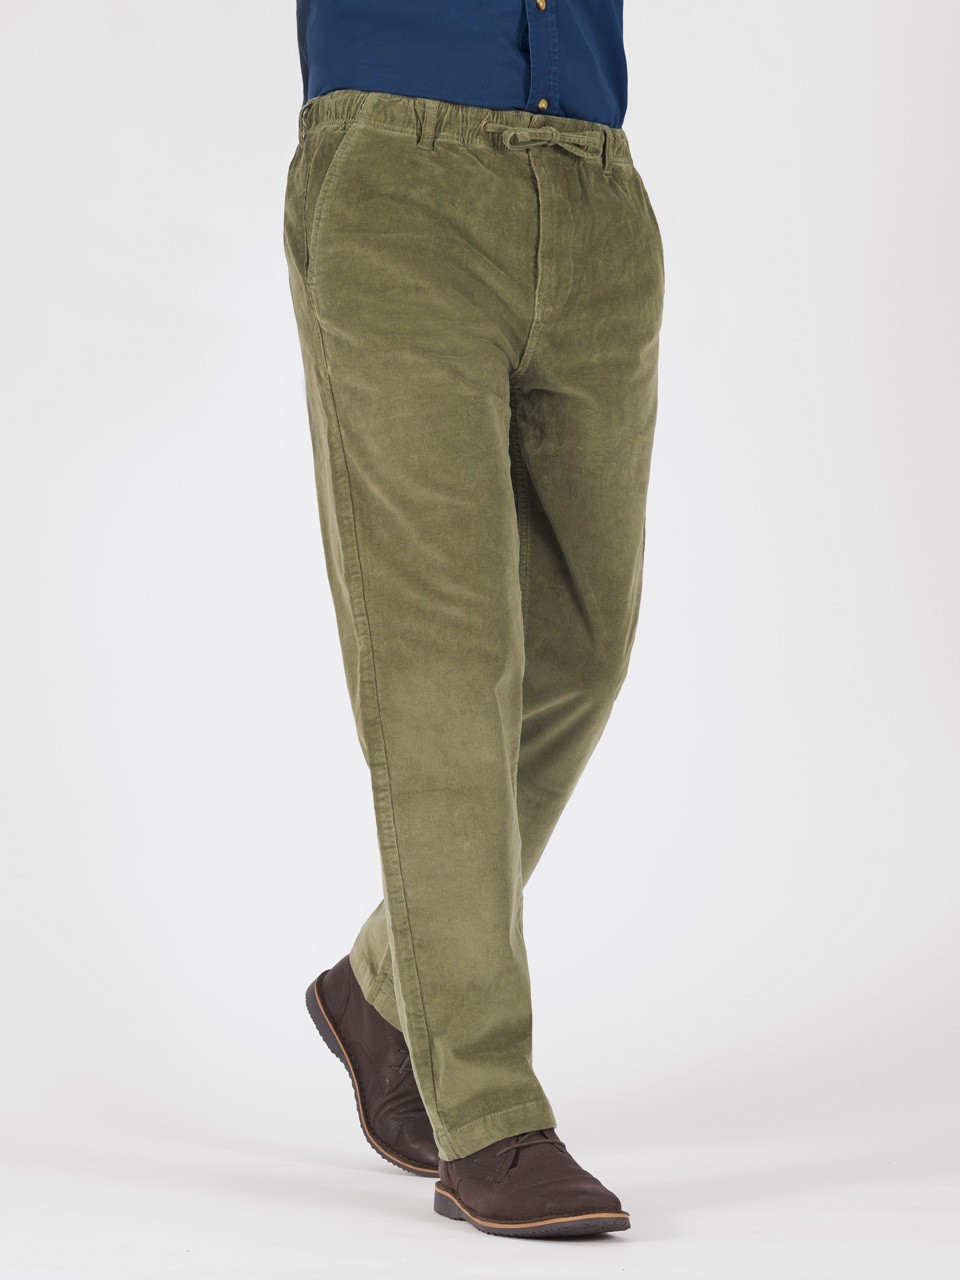 Women's Dark Green corduroy pants. Size 27. | eBay